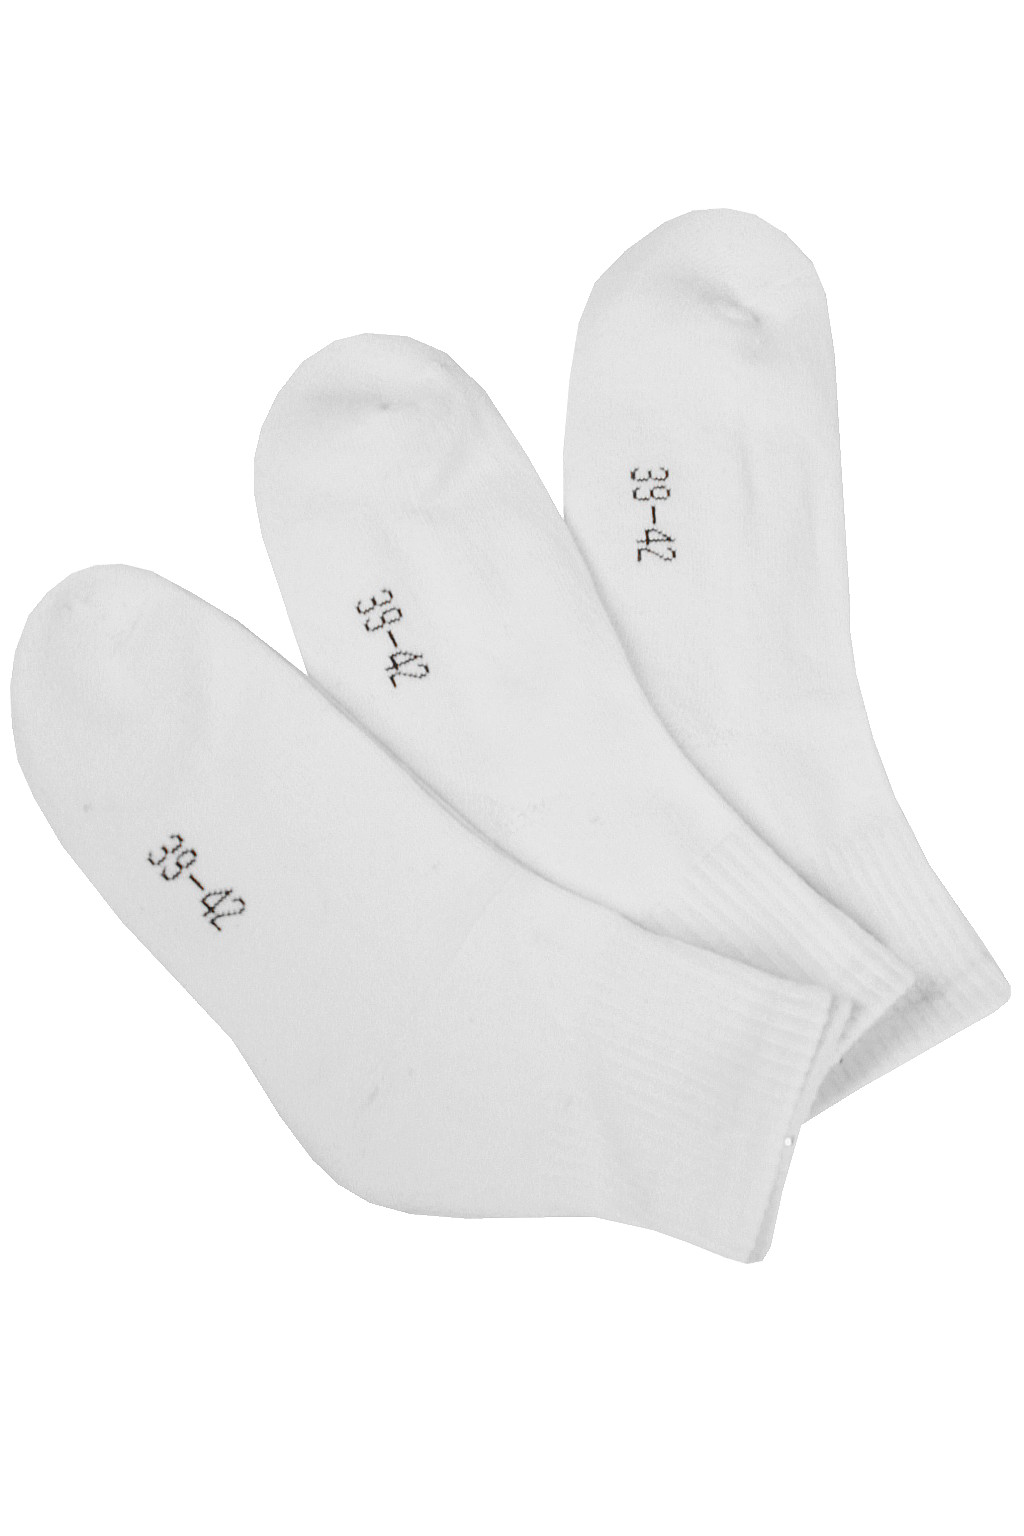 Sport froté ponožky MW3401A - 3páry 43-46 bílá